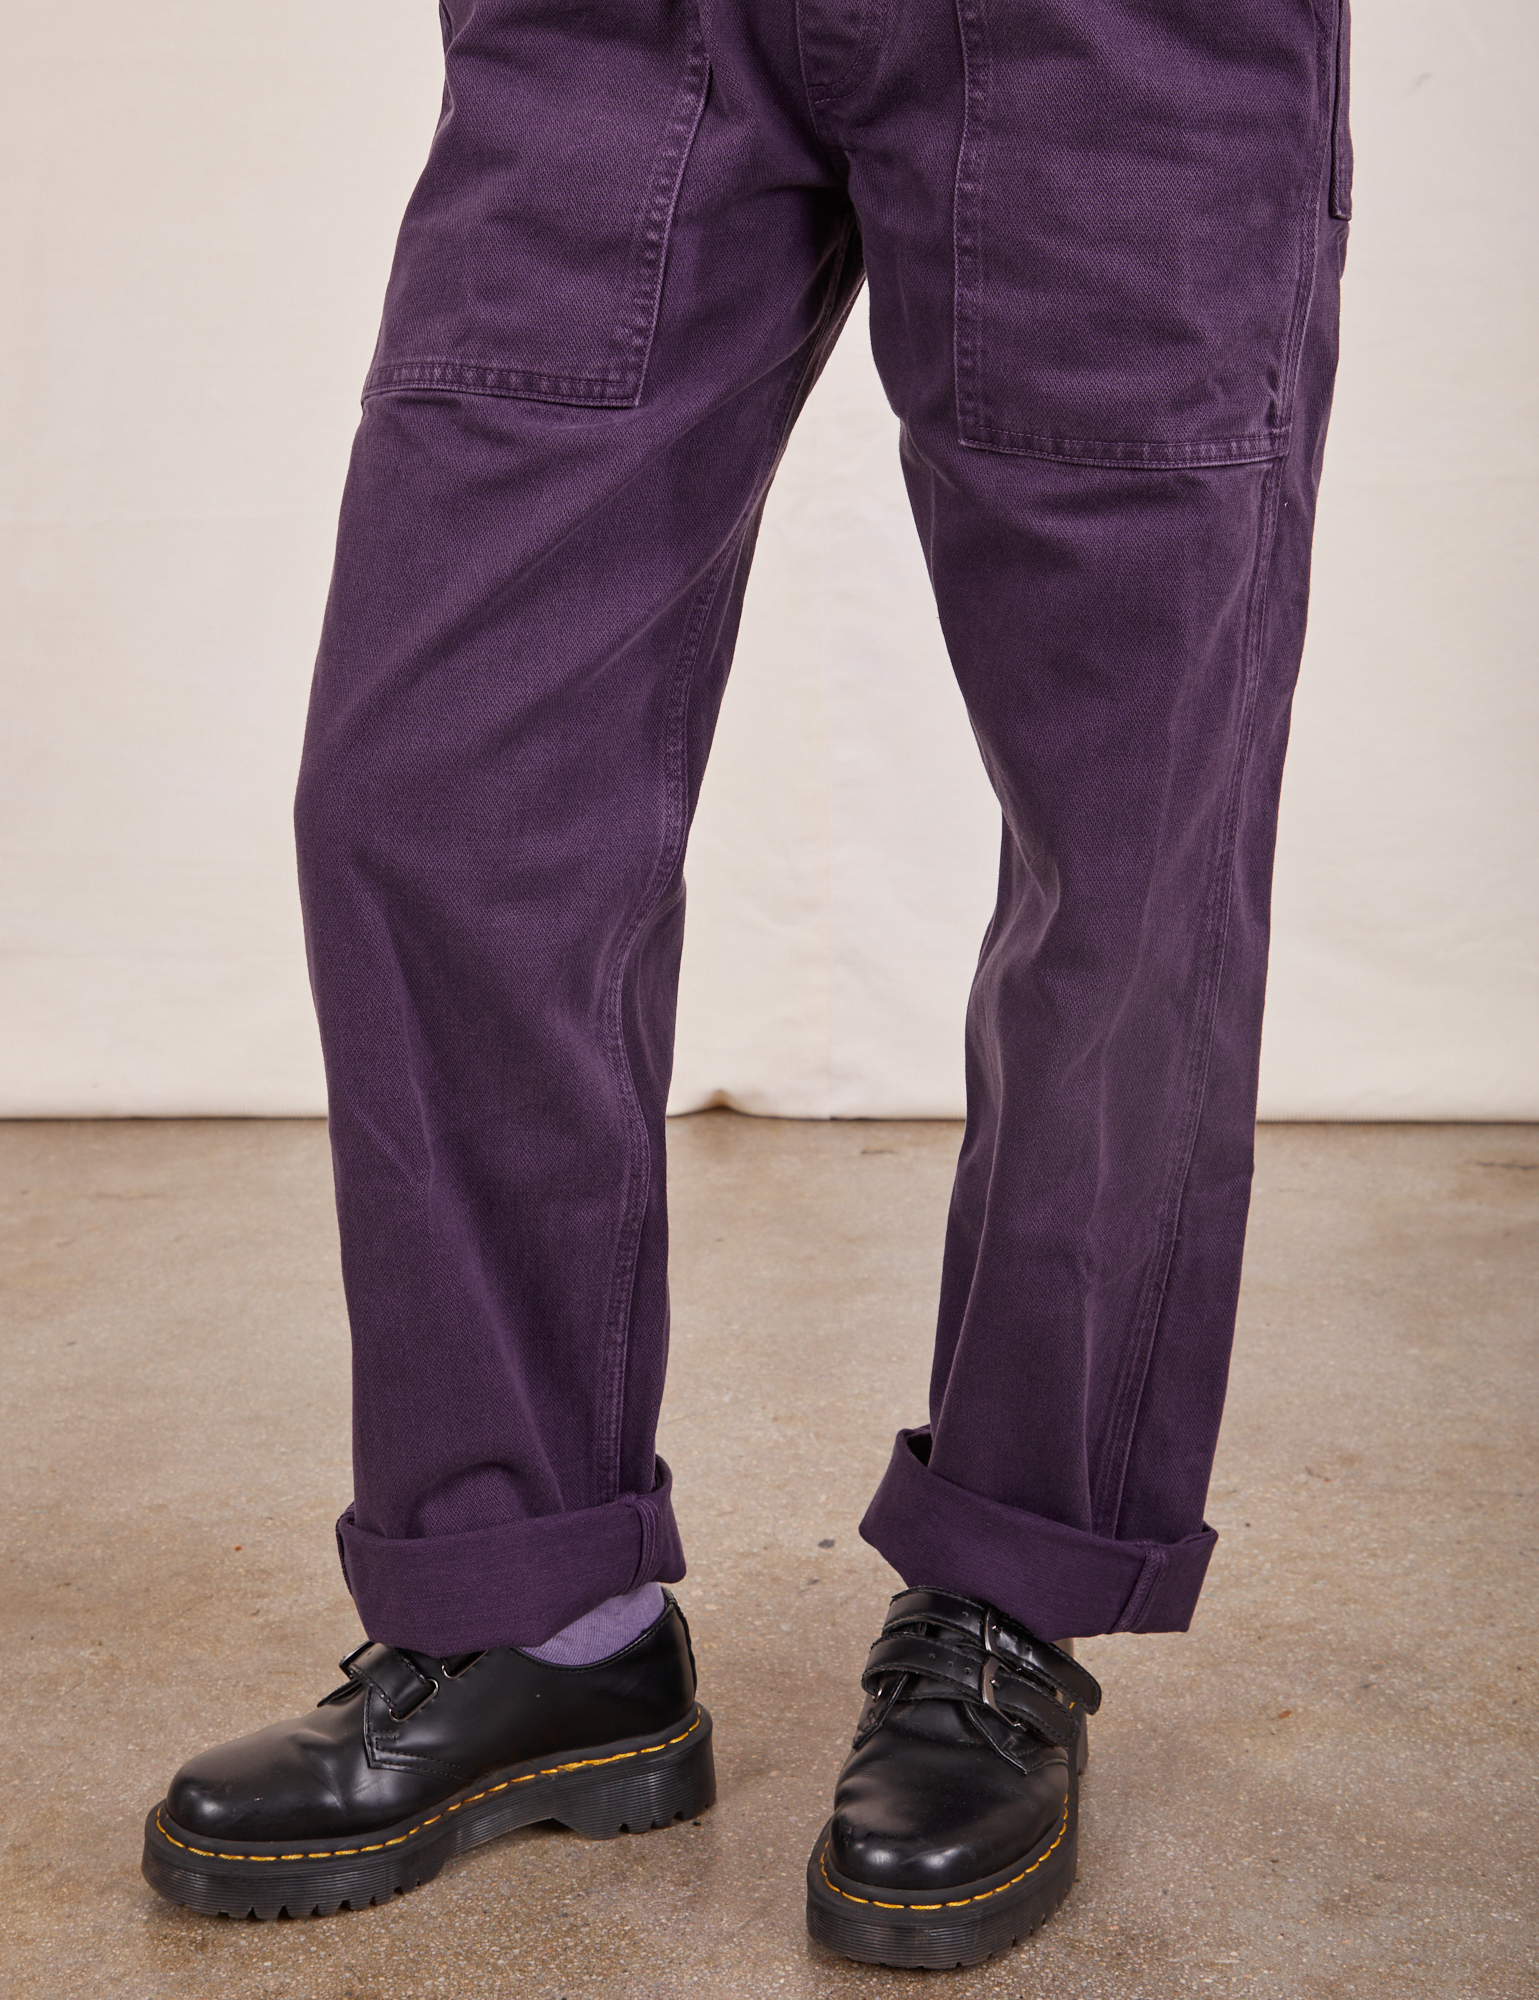 Pant leg close up of Original Overalls in Mono Nebula Purple worn by Hana